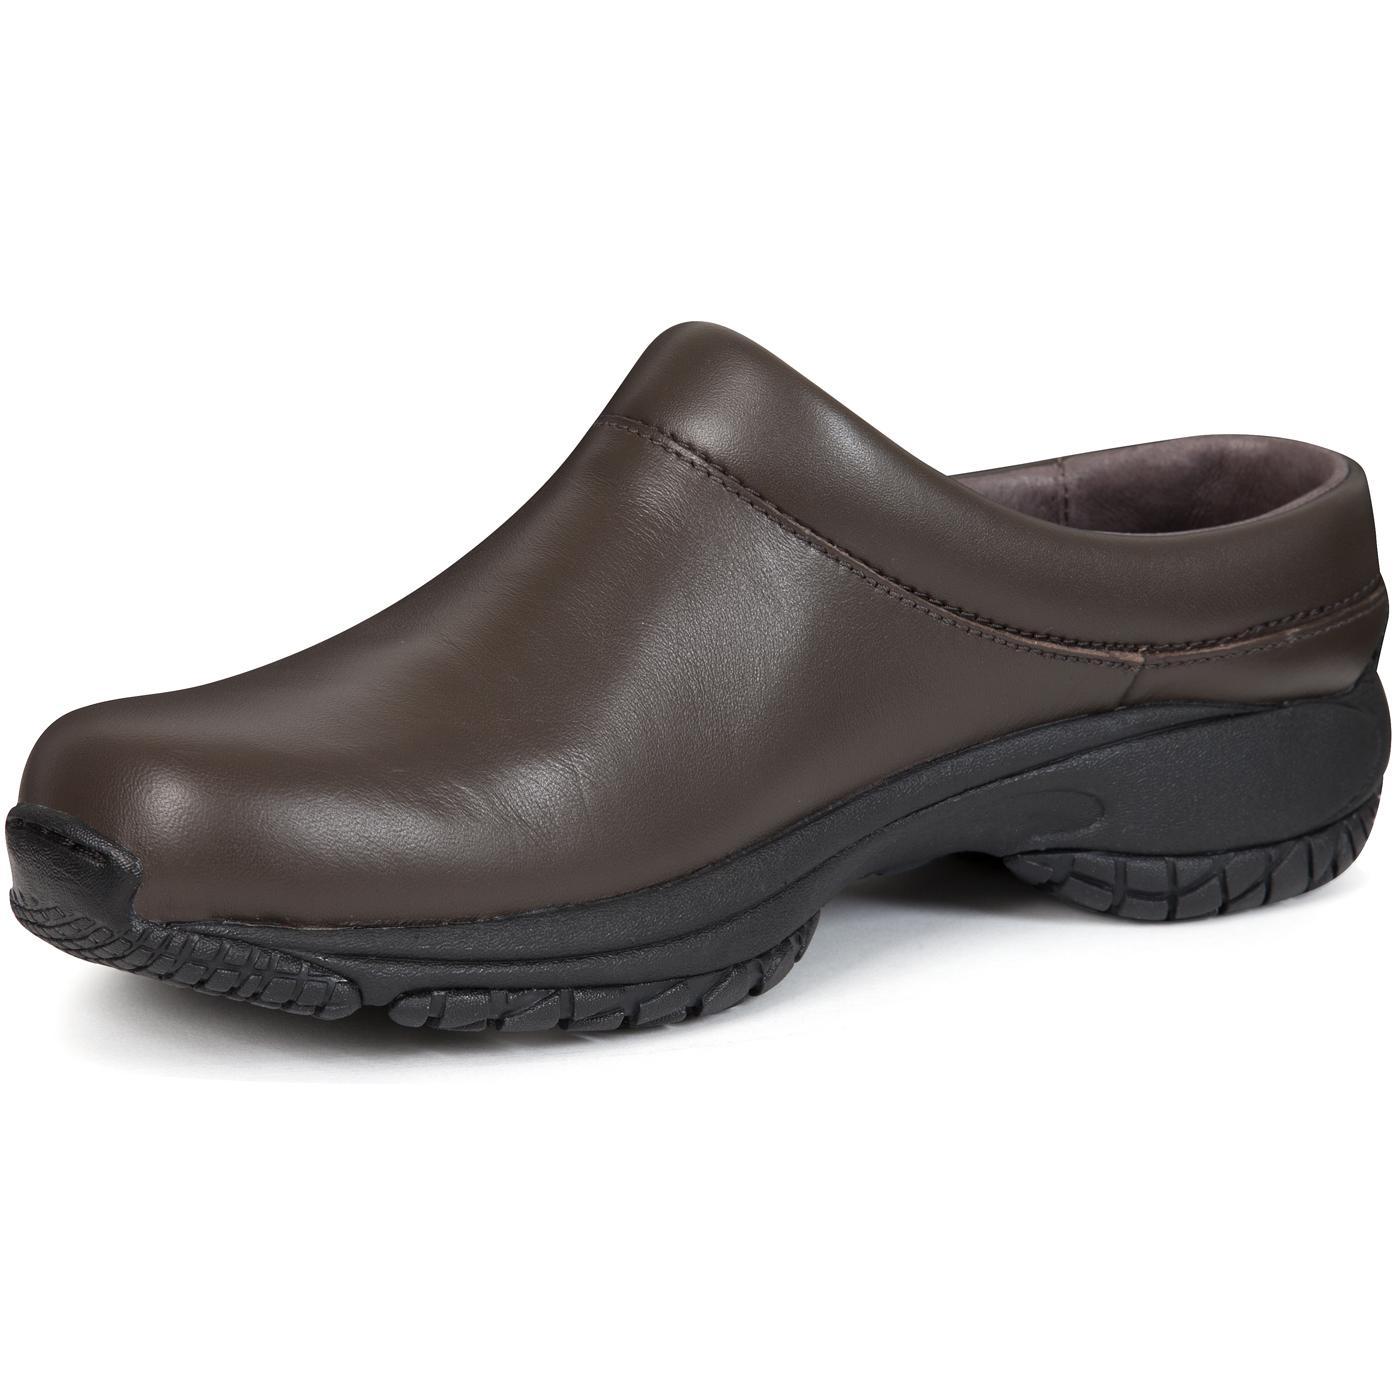 Merrell Encore Groove Pro Women's Slip Resistant Clog - Lehigh Safety Shoes